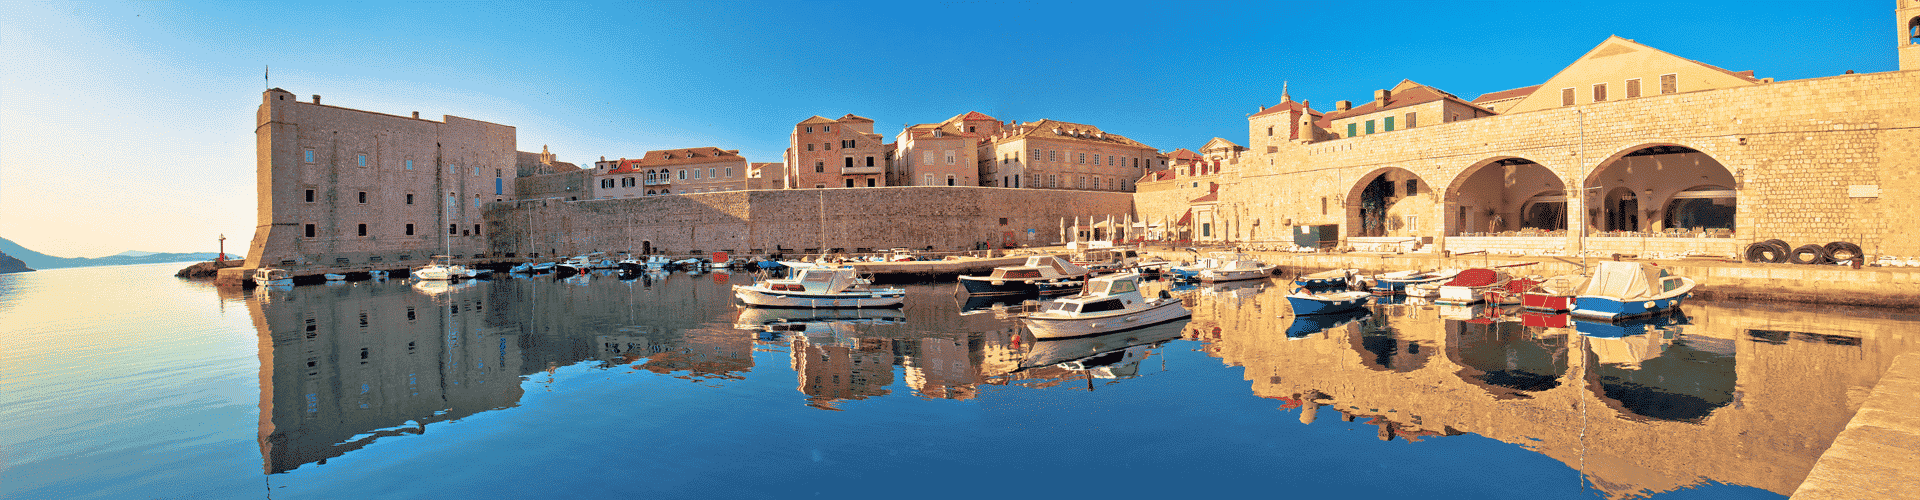 Essential Free Tour Dubrovnik Banner